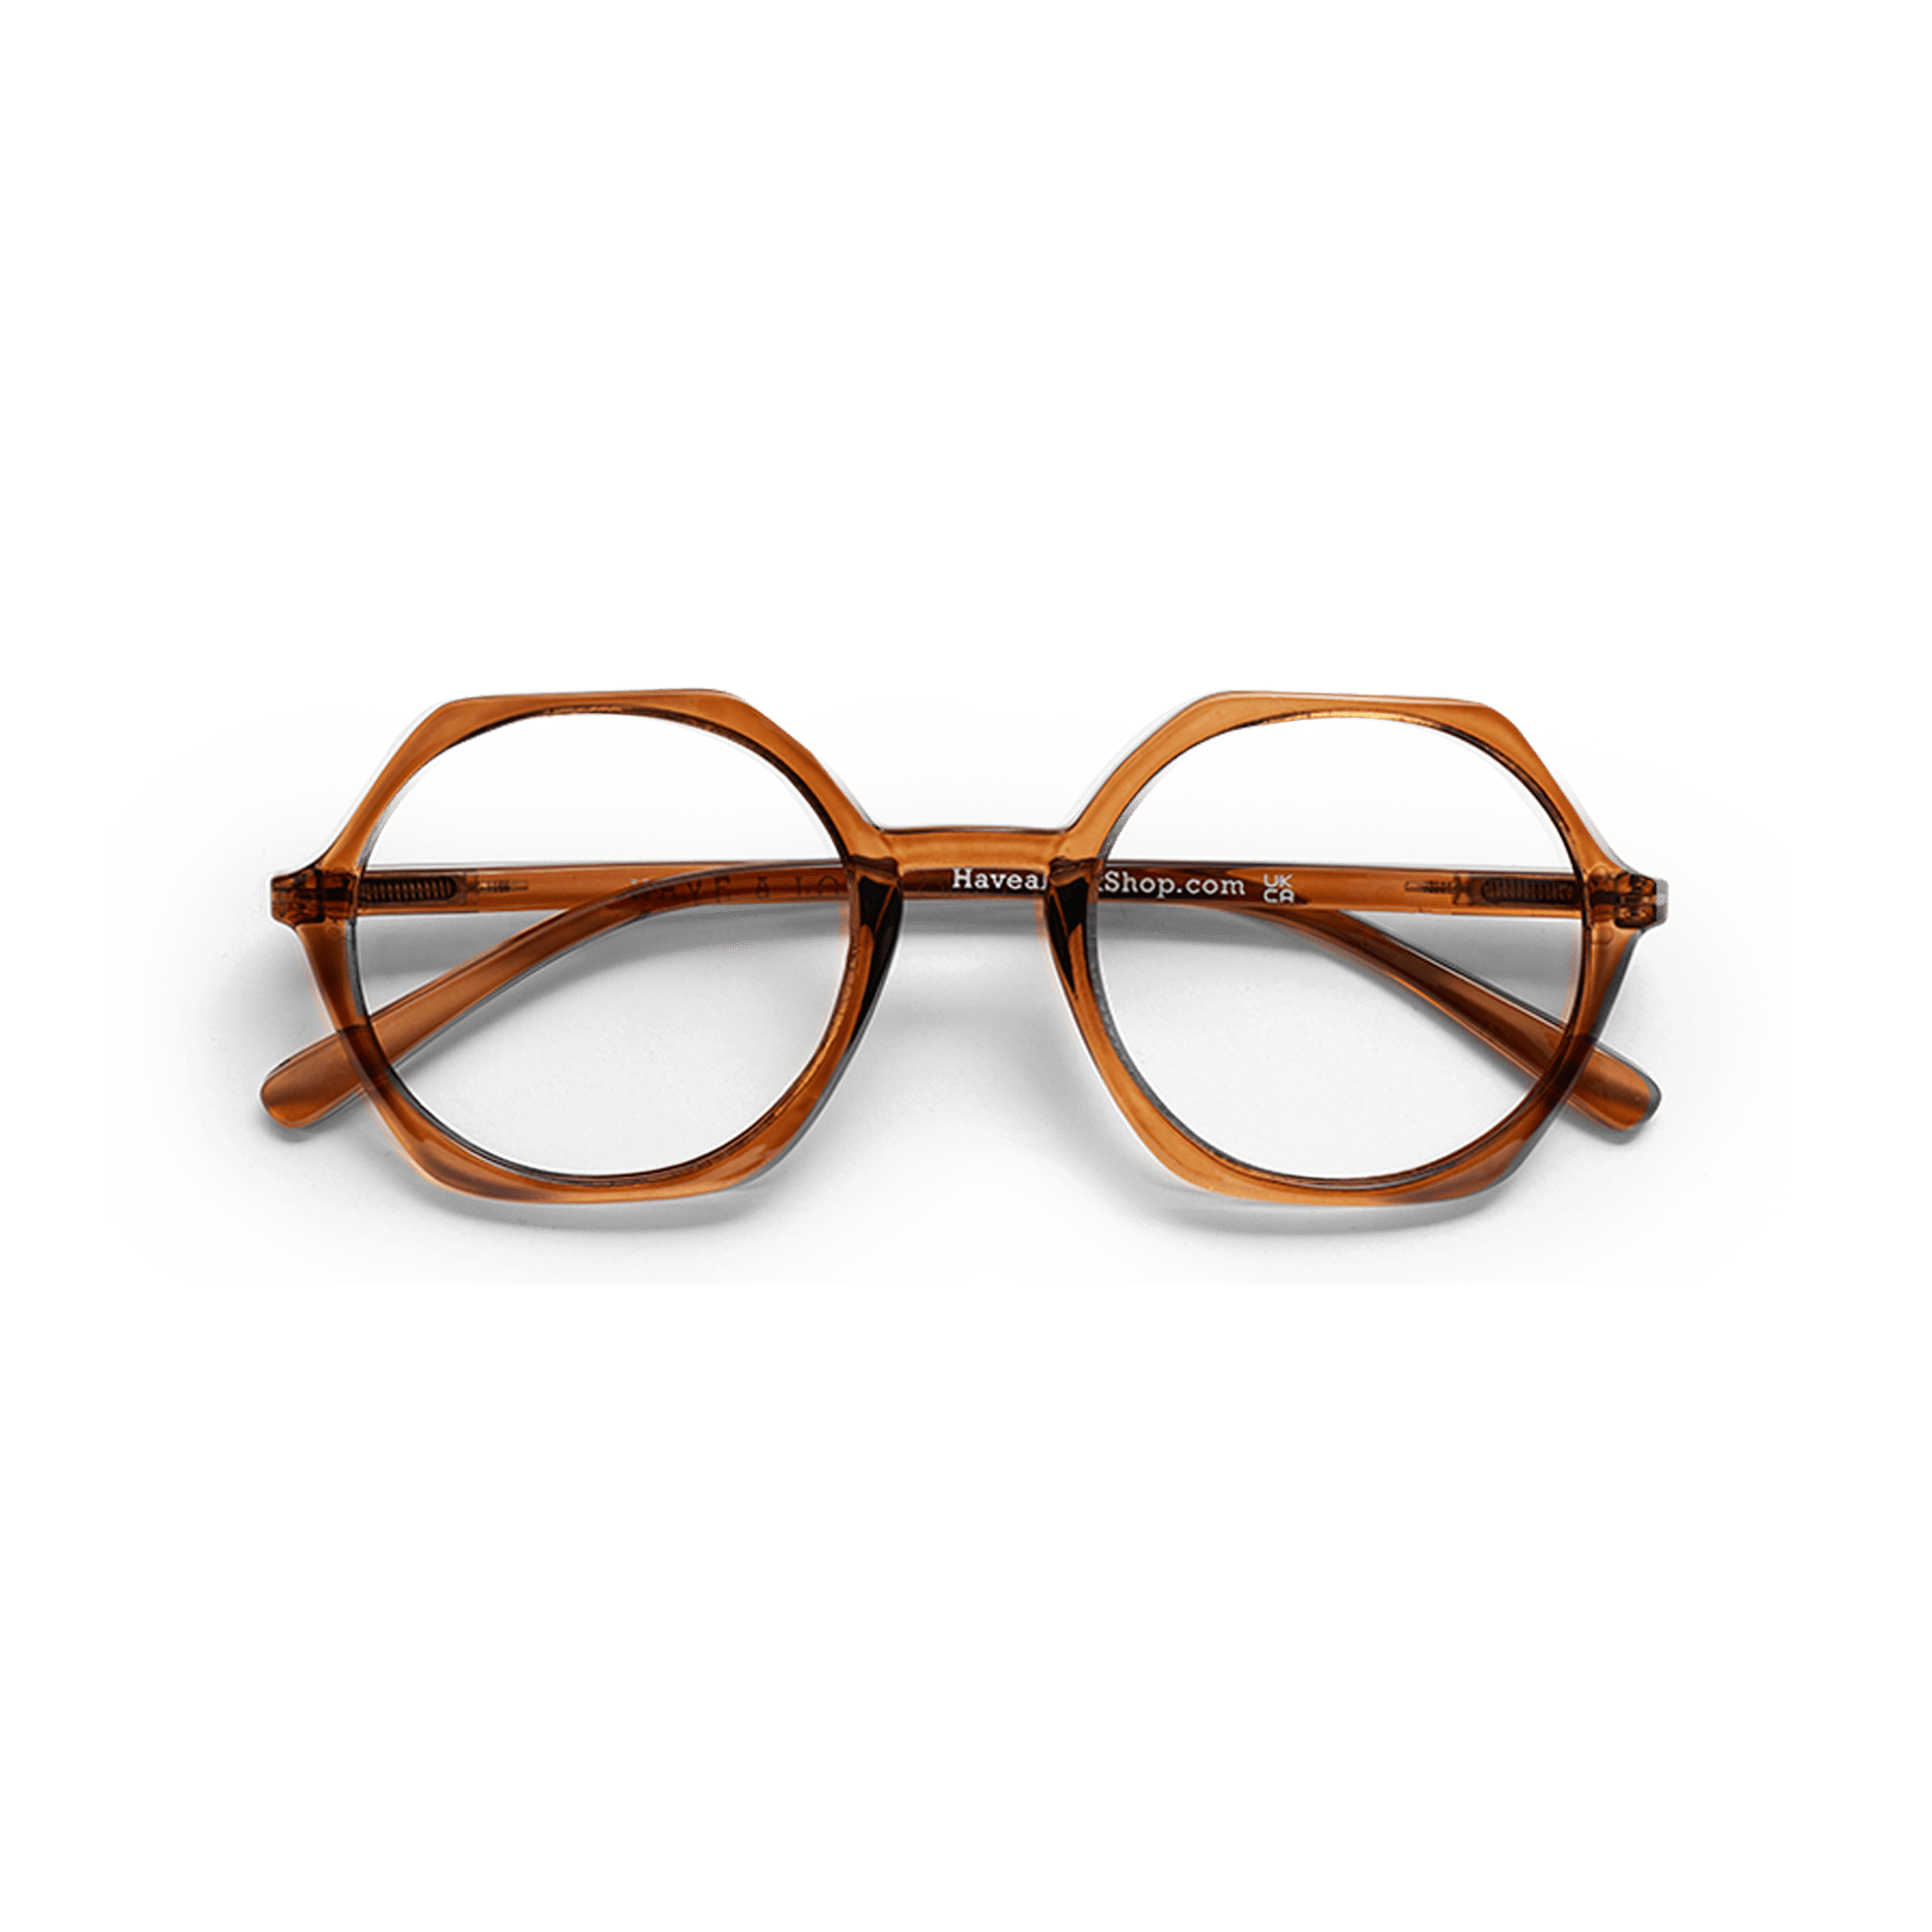 Minus glasses Edgy - brown